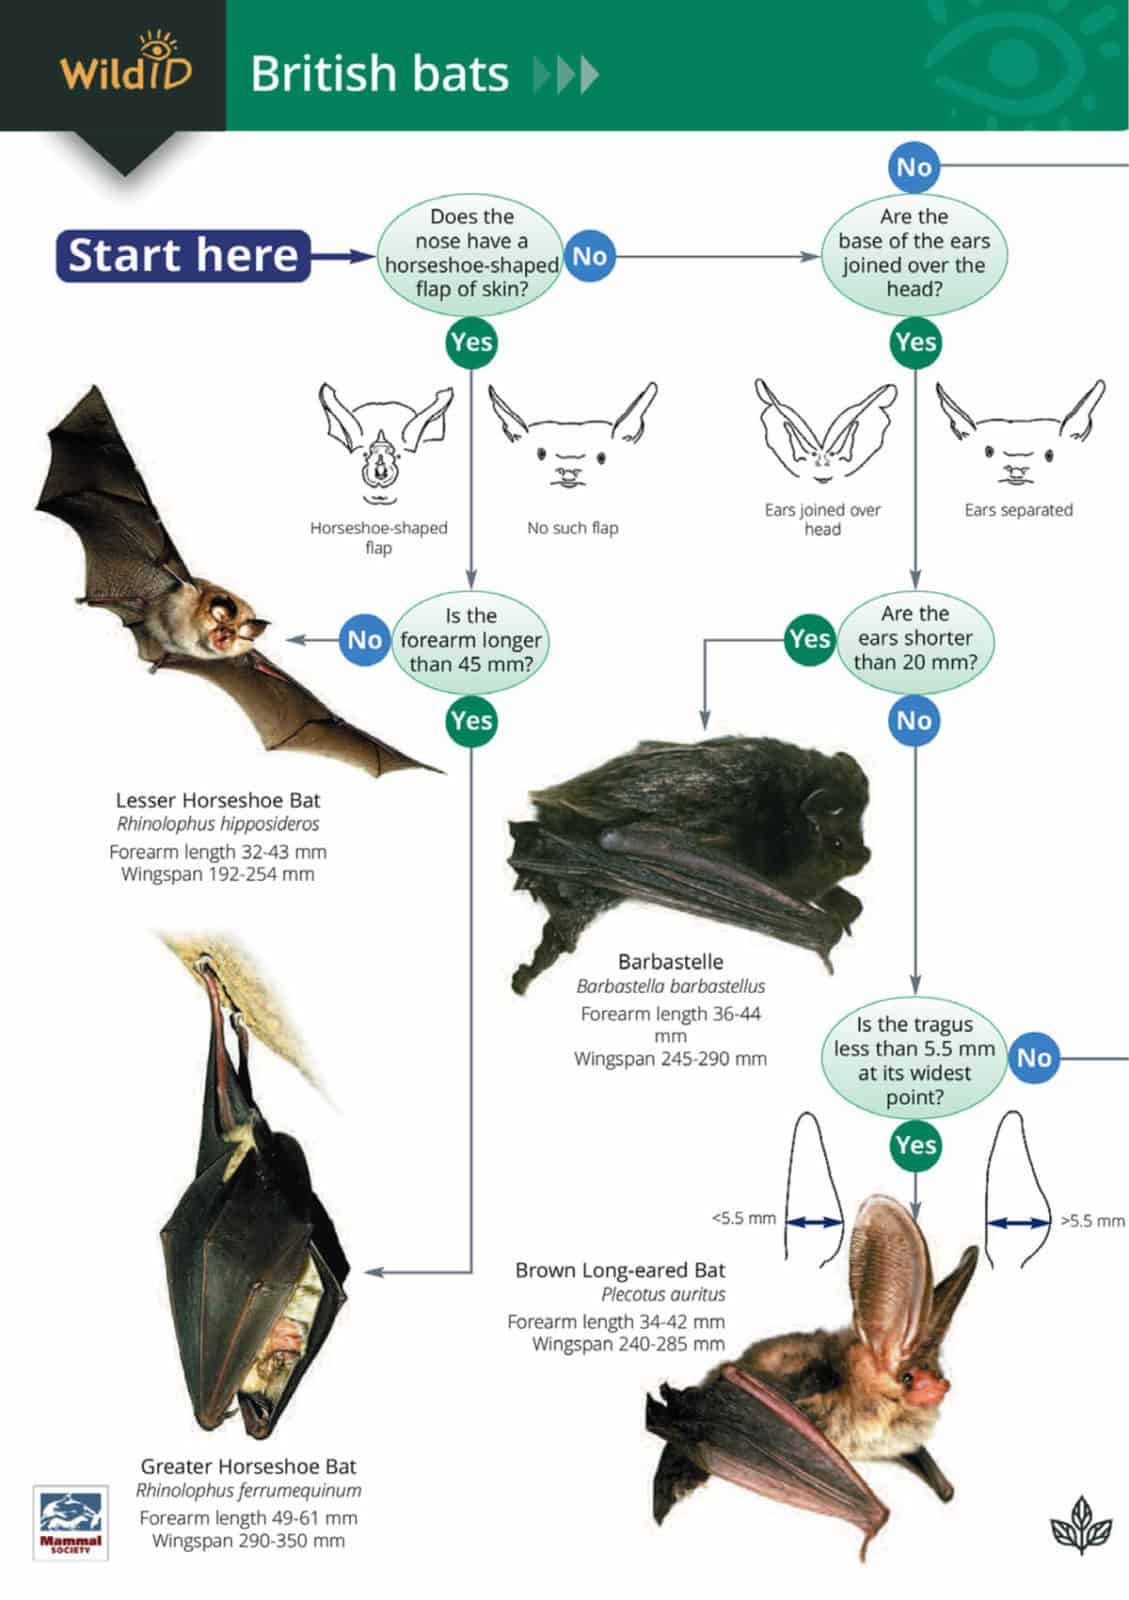 Field Studies Council - Bats Guide